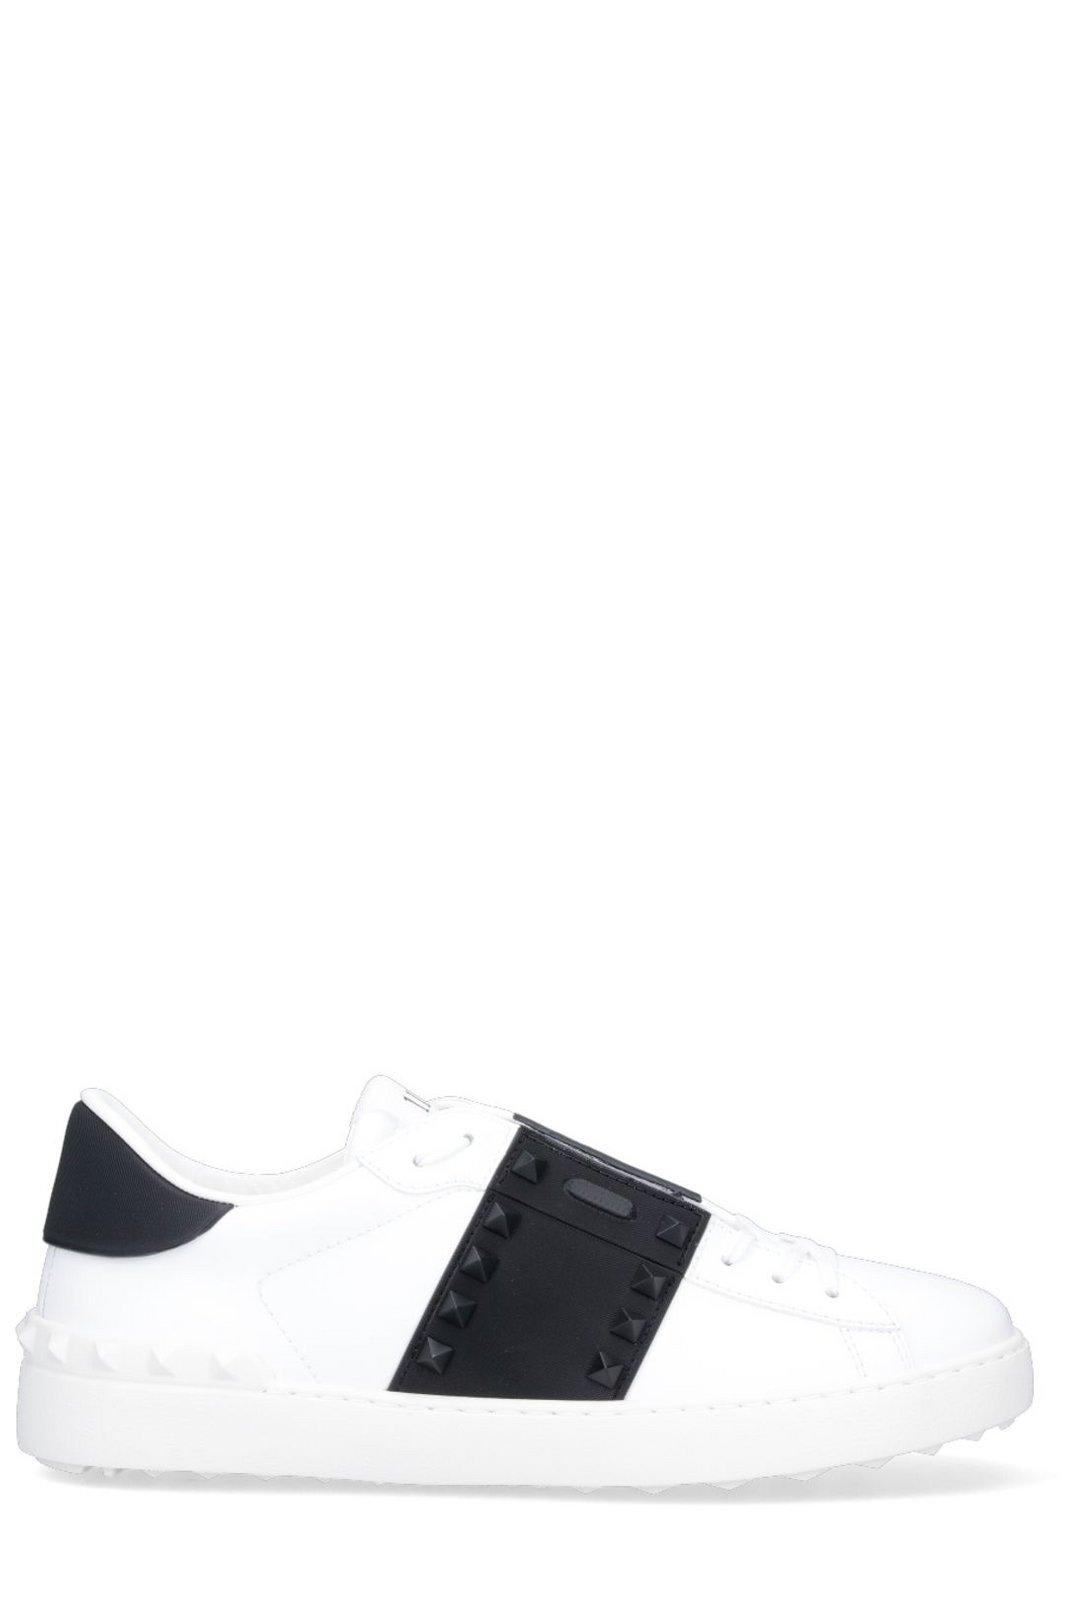 Valentino Garavani Rockstud Lace-up Sneakers In White